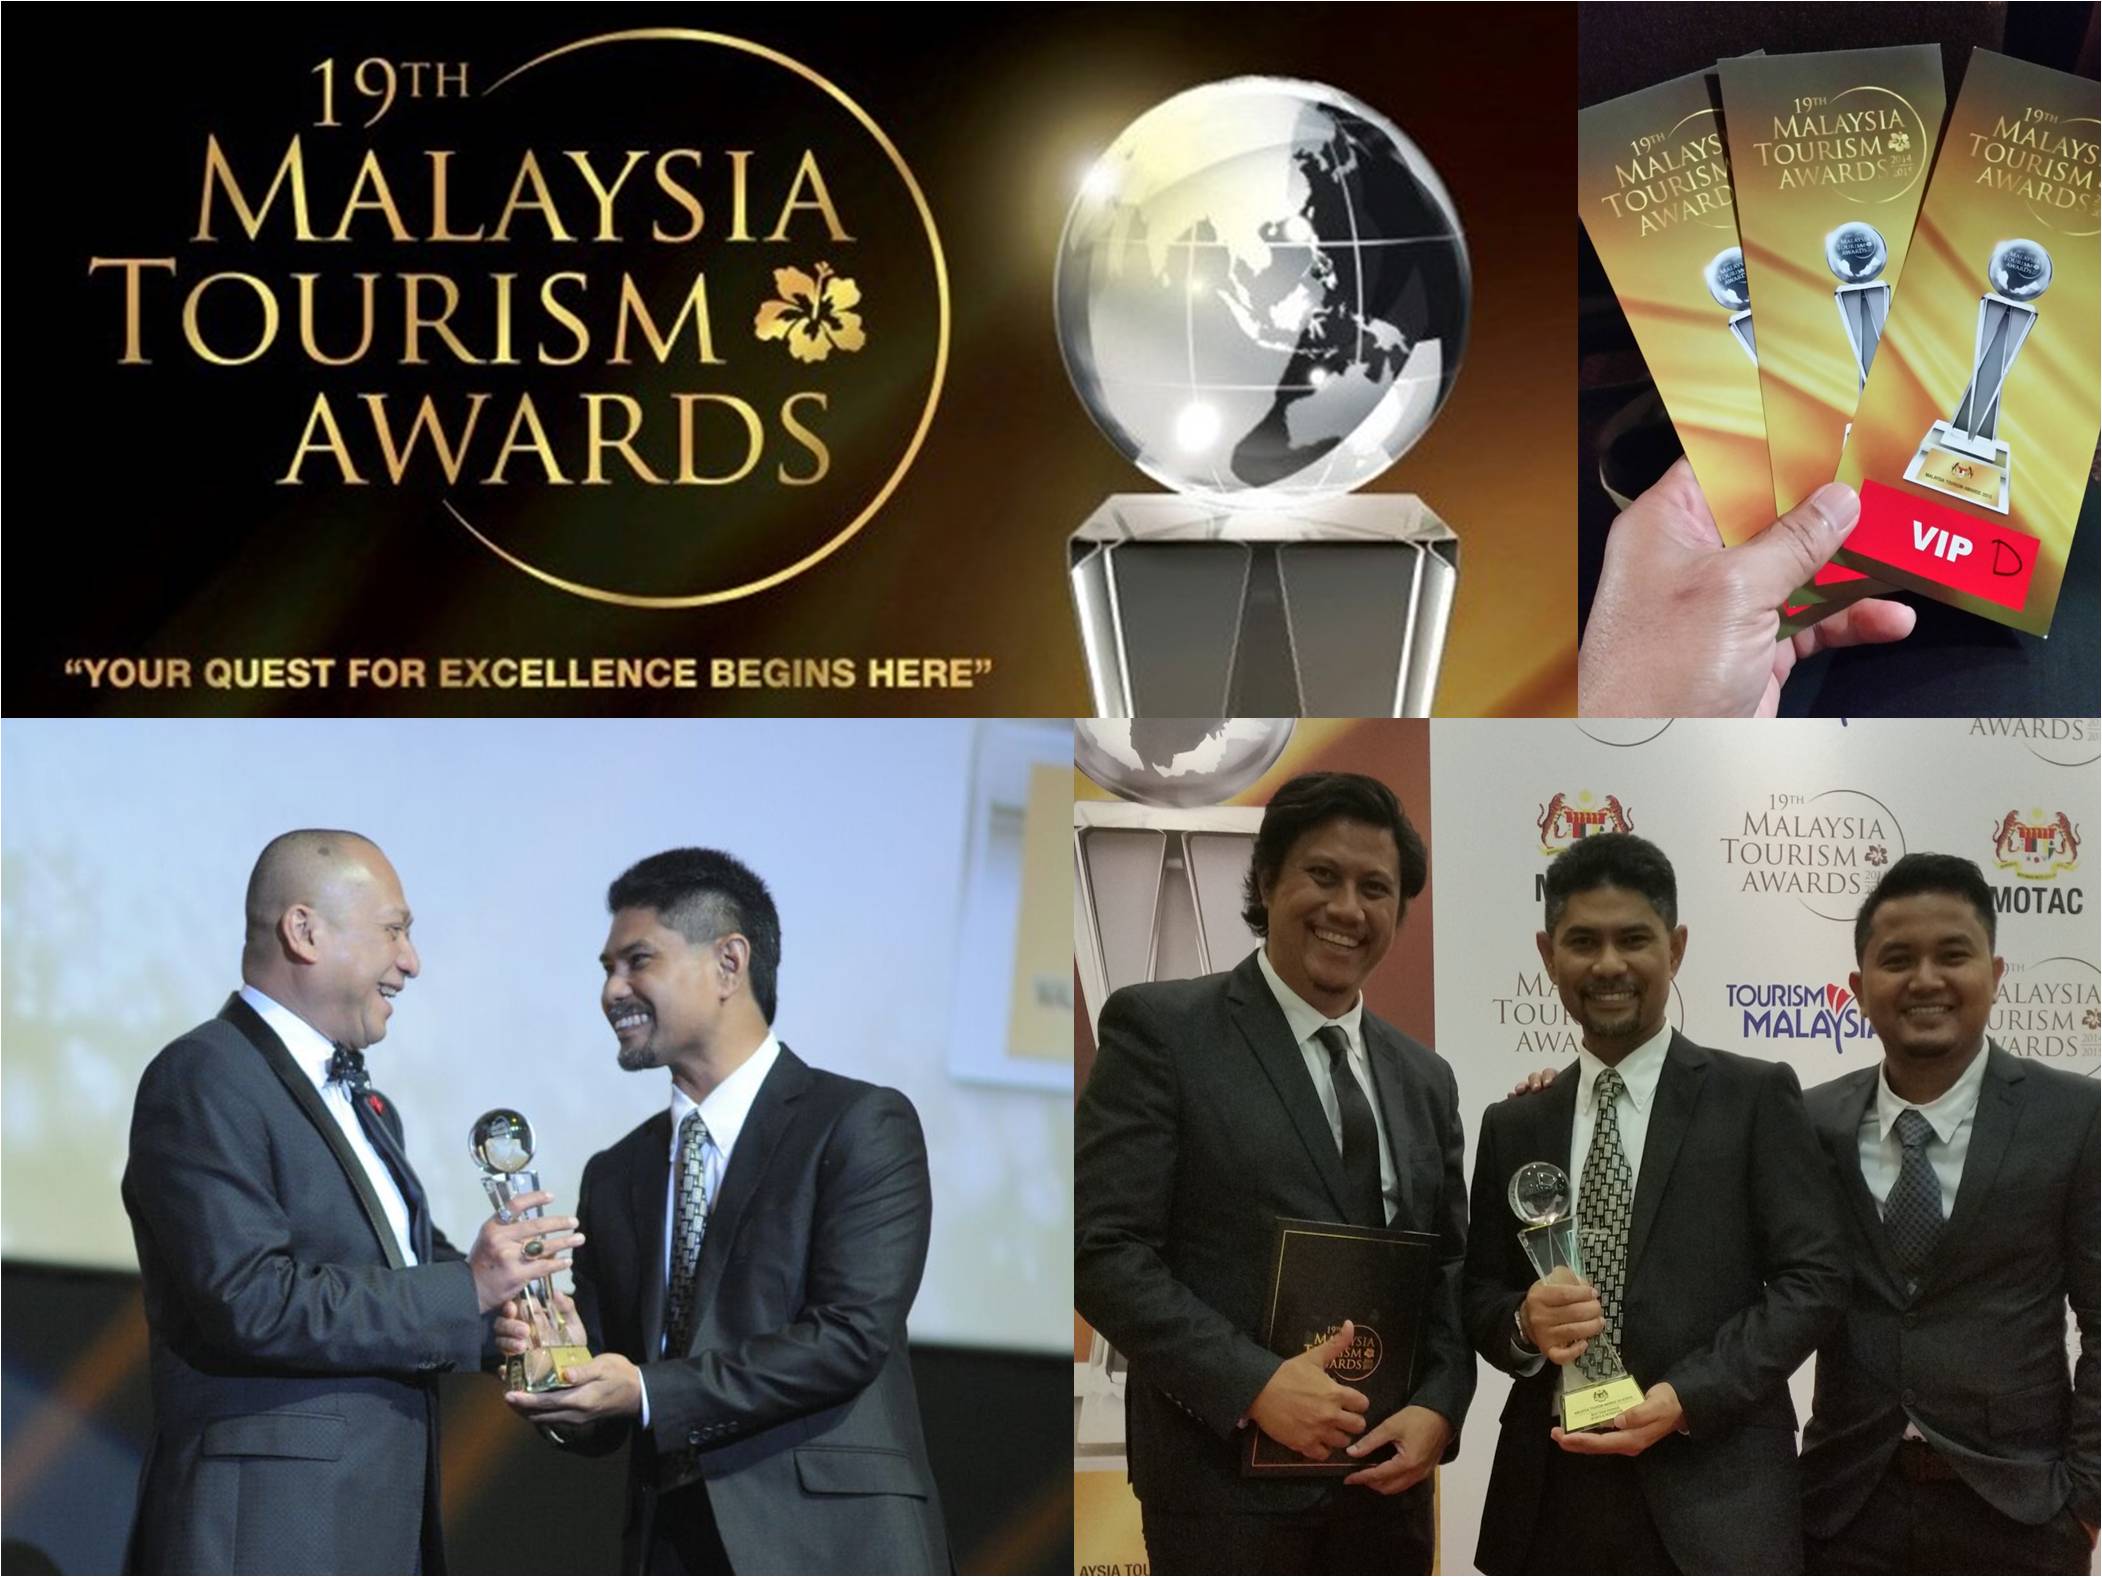 The prestigous 19th Malaysia Tourism Award event